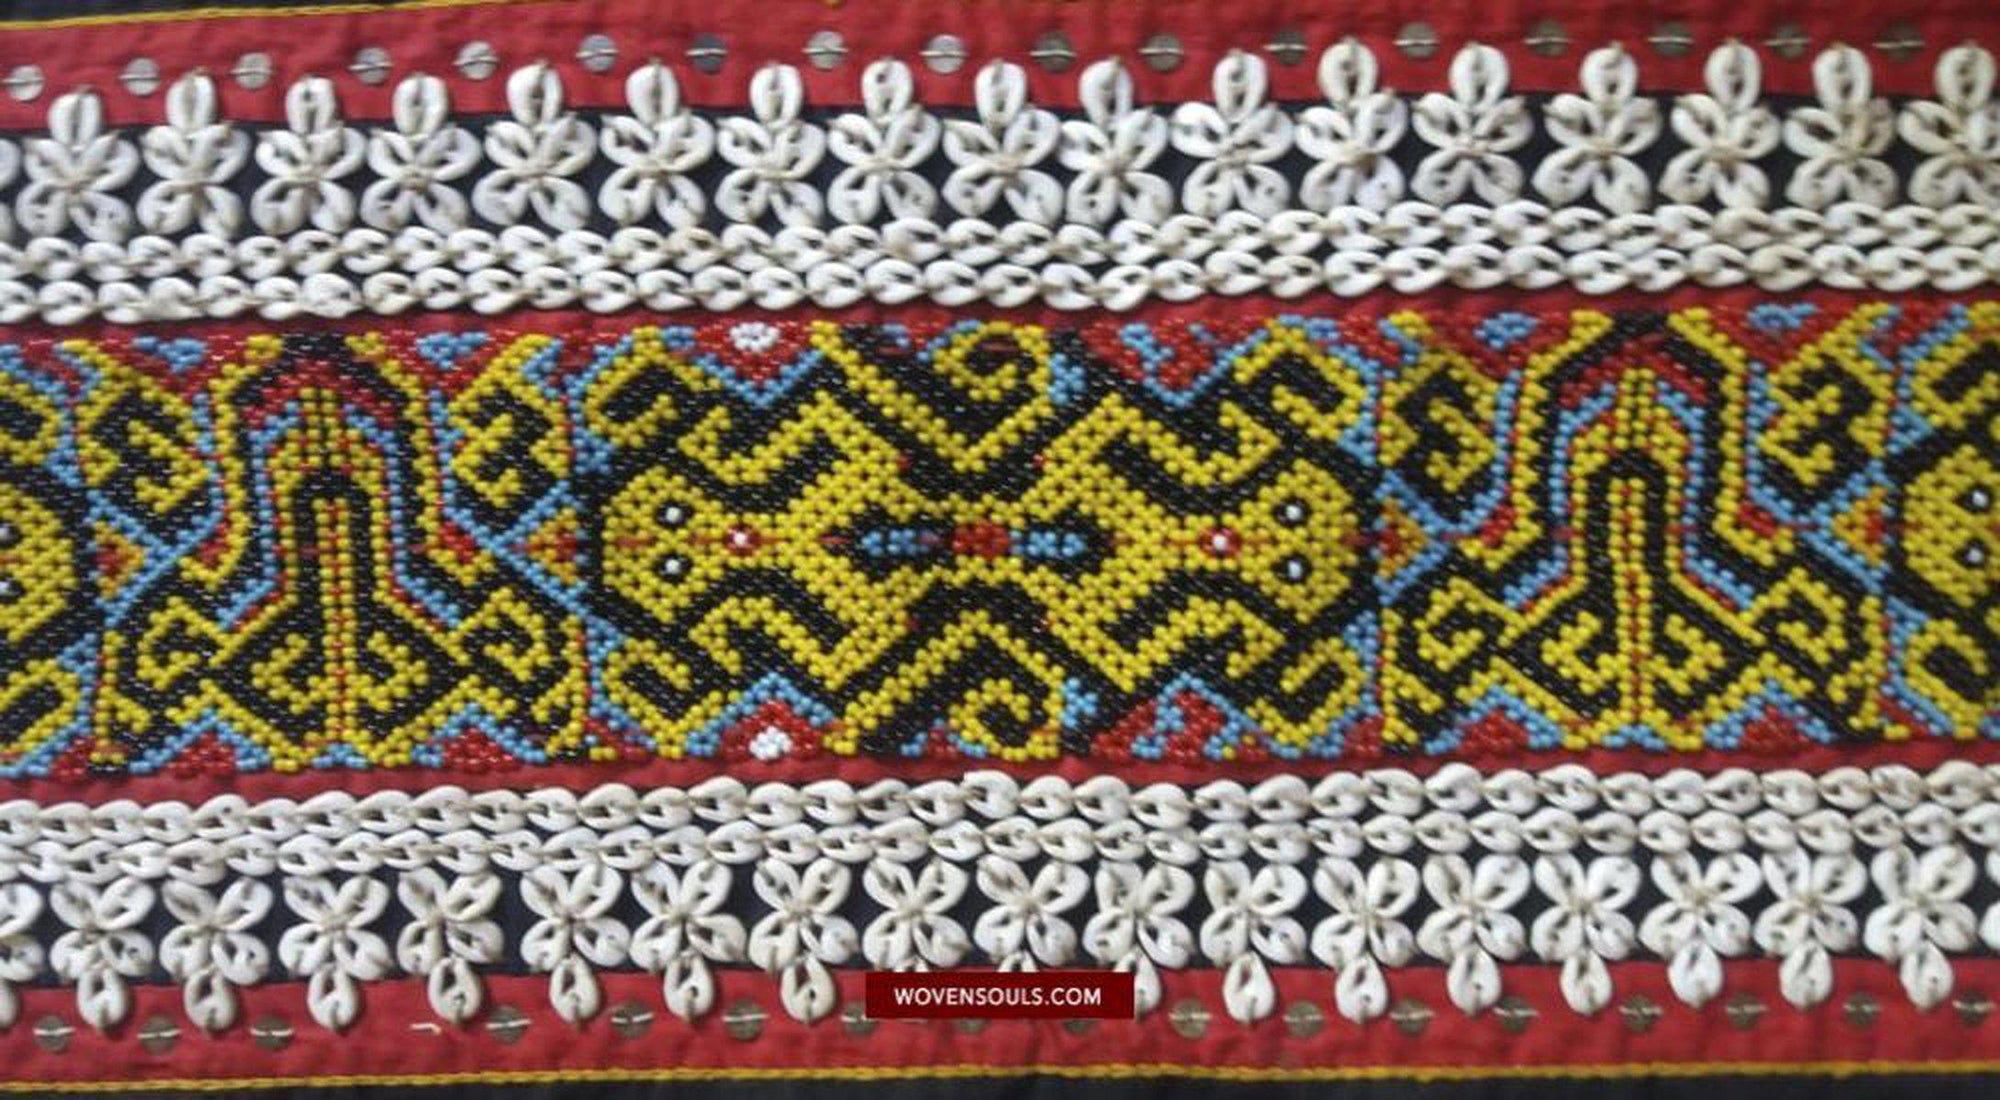 Textile bead work handmade by ✸